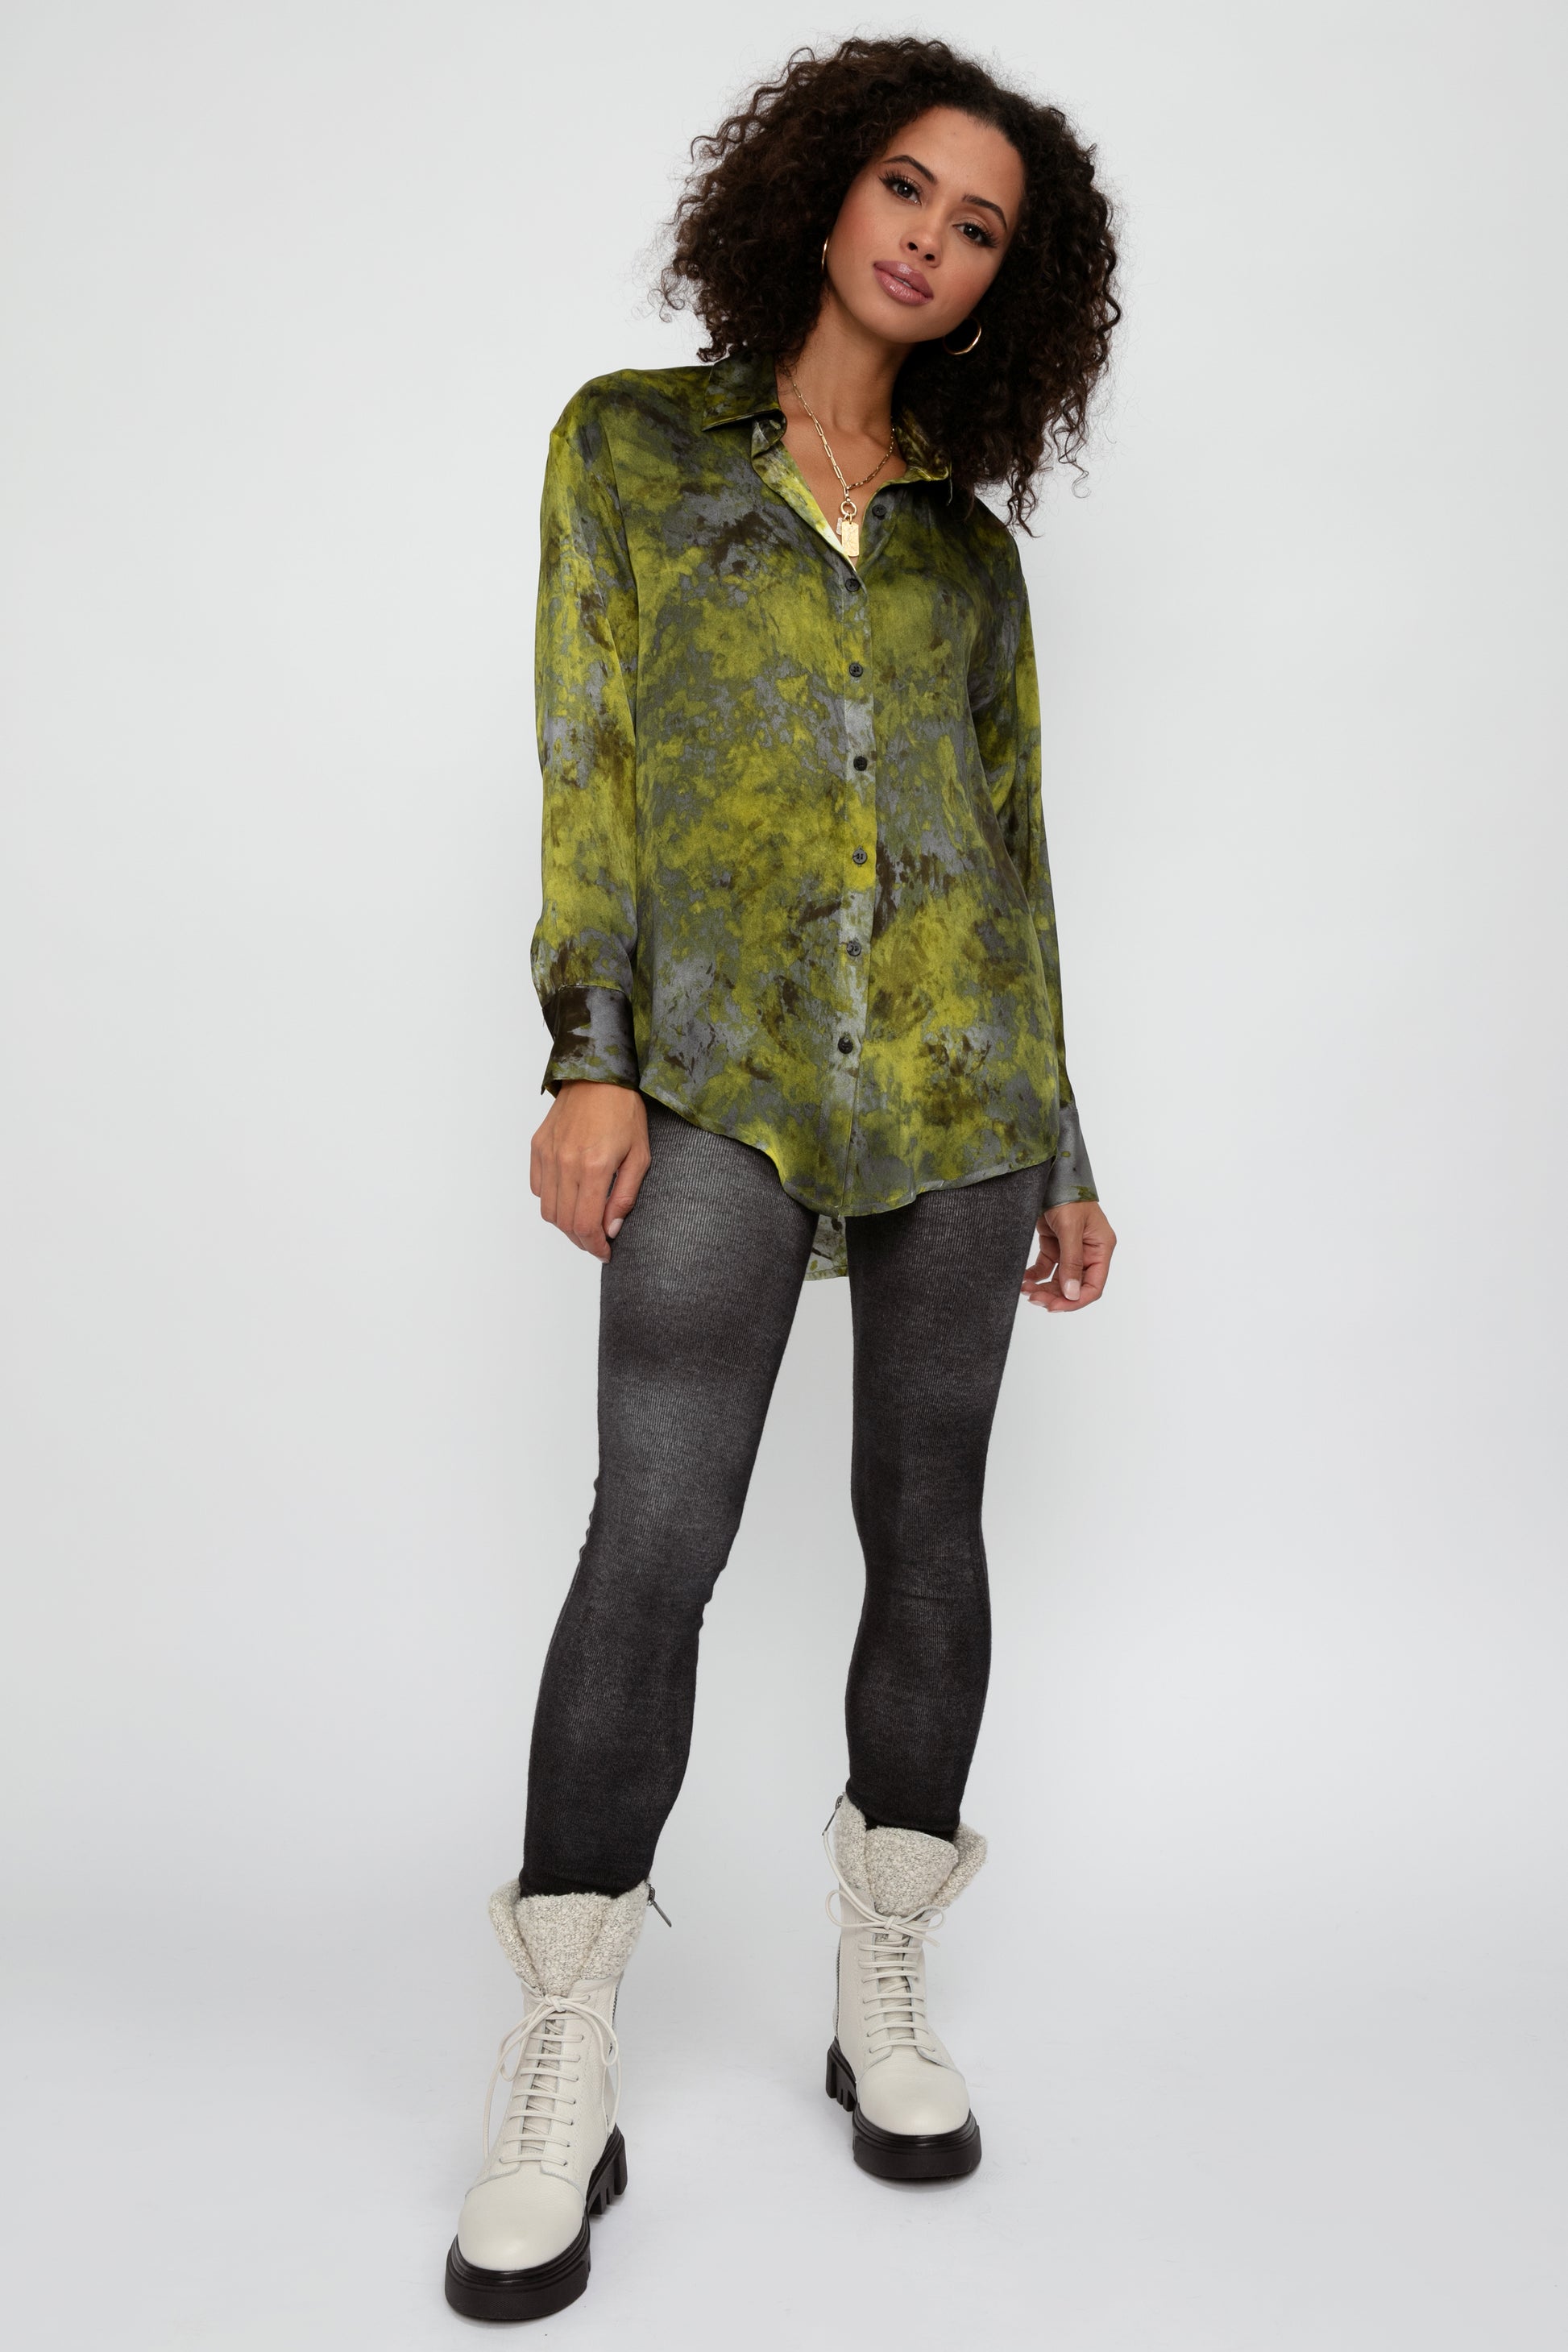 AVANT TOI Boreal Silk Shirt in Lichen